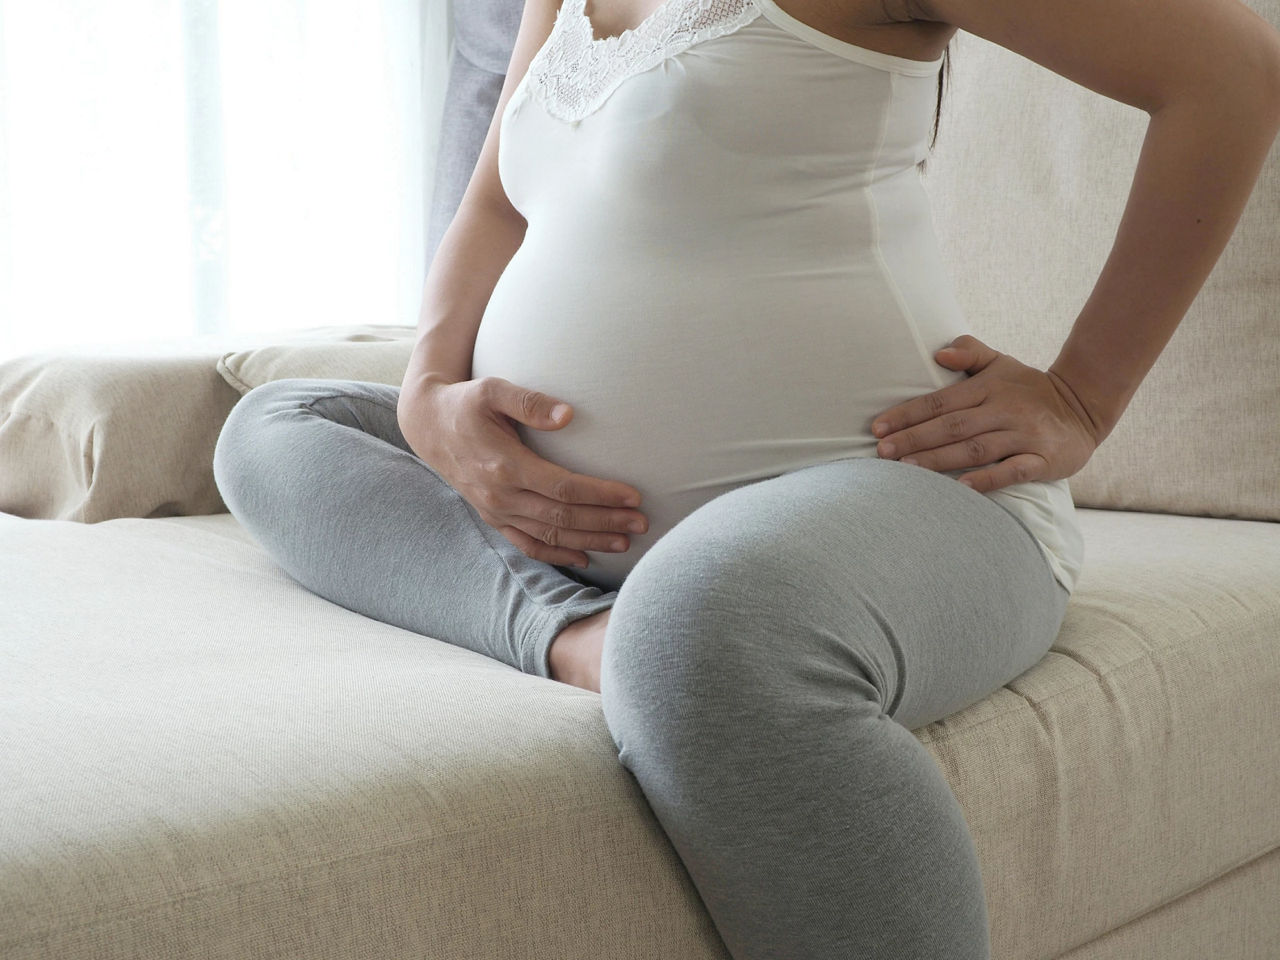 36 Weeks Pregnant, Symptoms & Advice